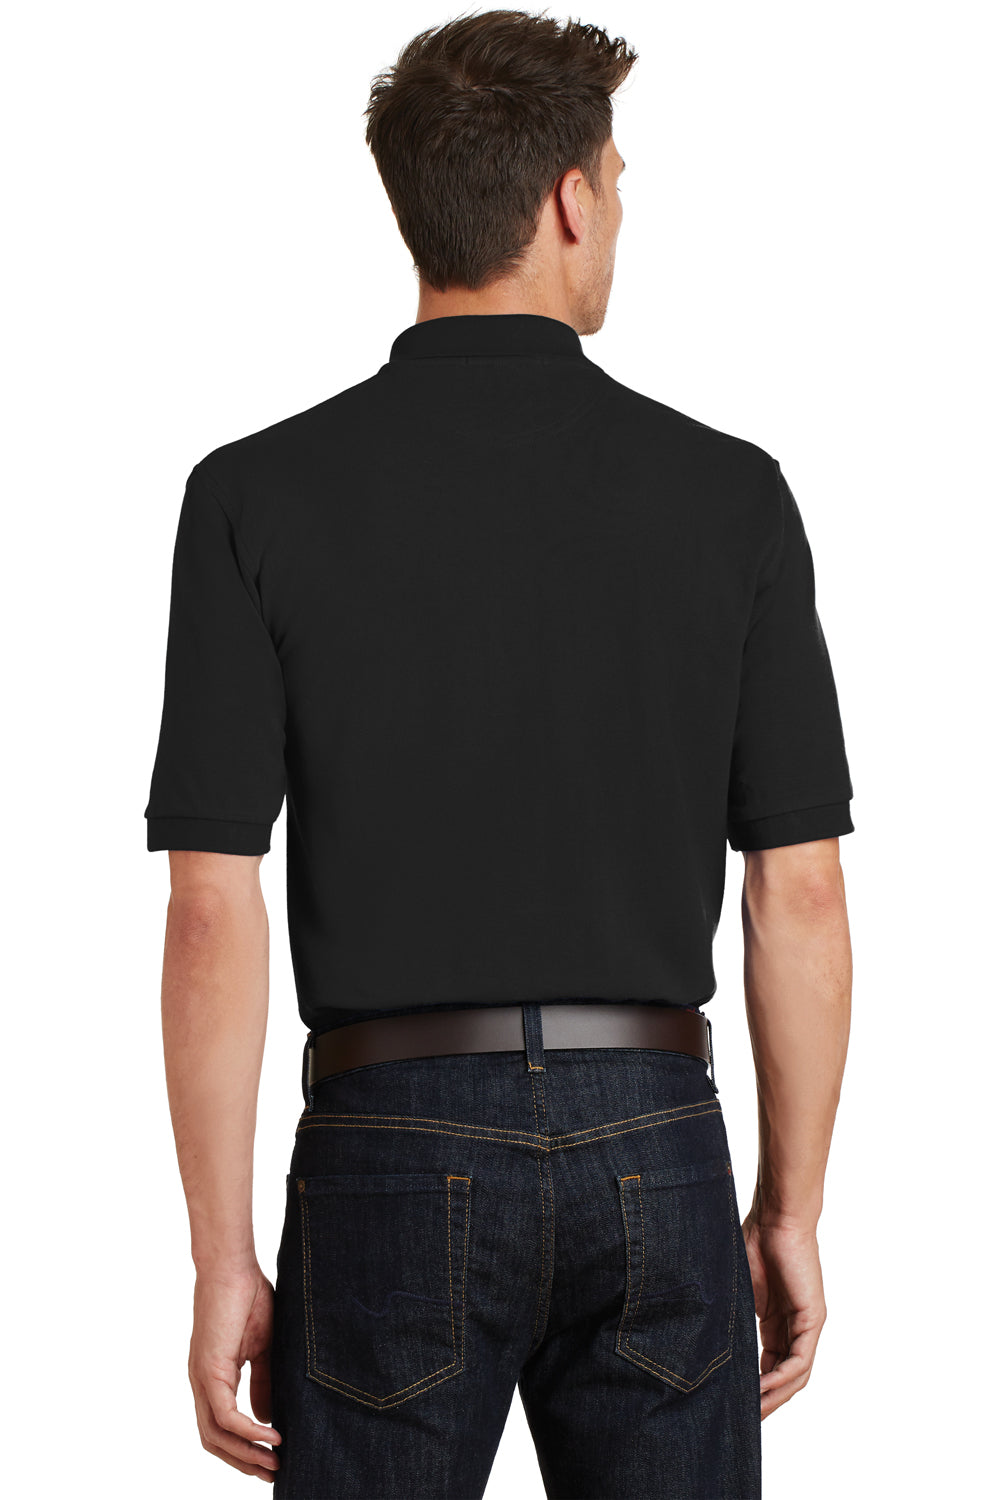 Port Authority K420P Mens Short Sleeve Polo Shirt w/ Pocket Black Back